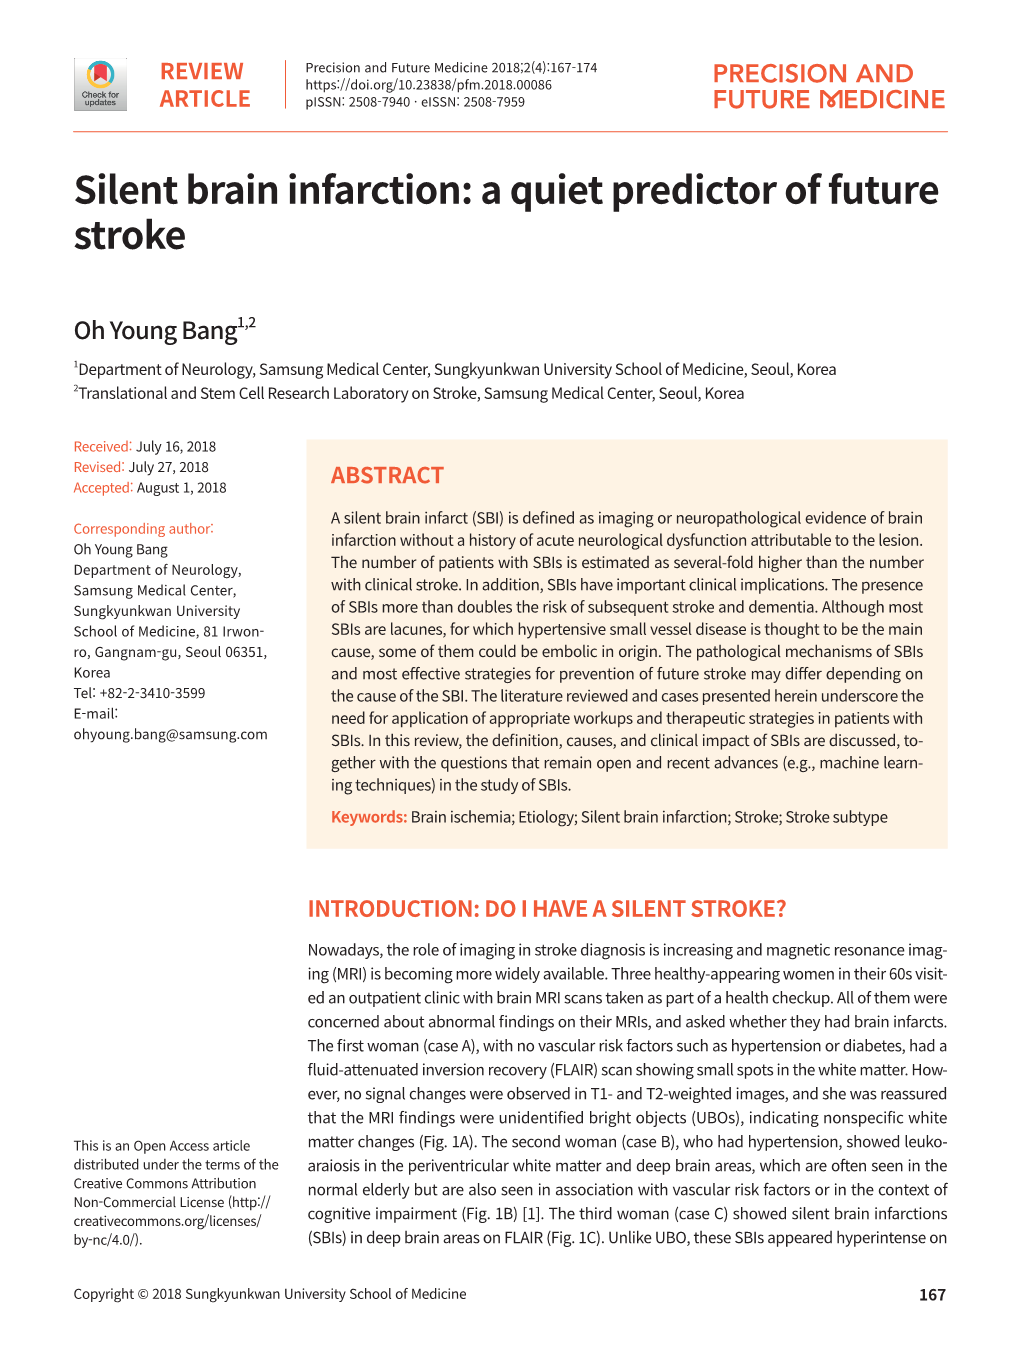 Silent Brain Infarction: a Quiet Predictor of Future Stroke